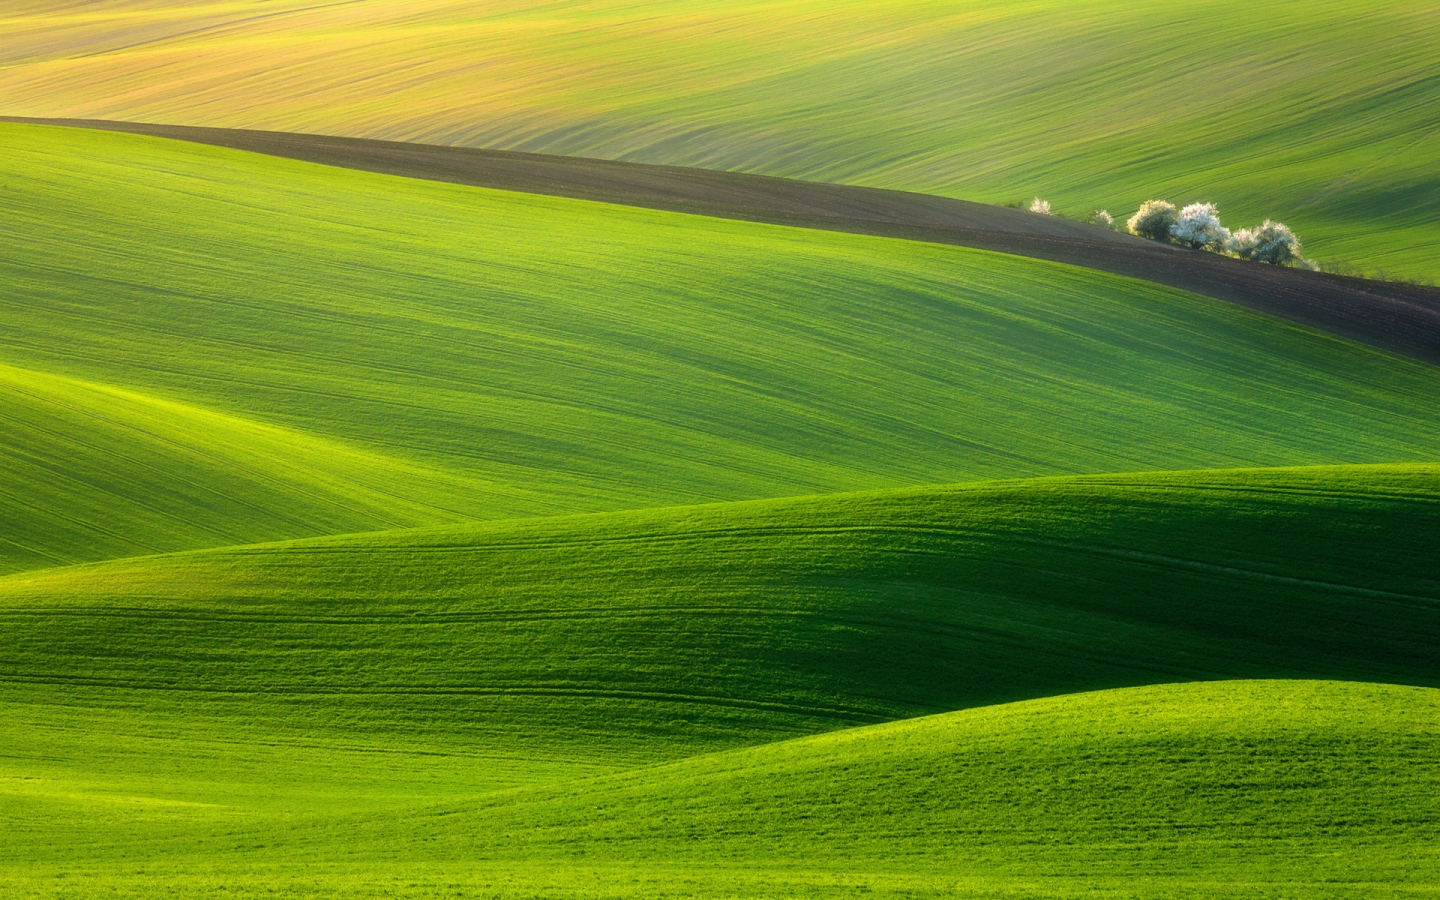 Spectacular Green Field for 1440 x 900 widescreen resolution